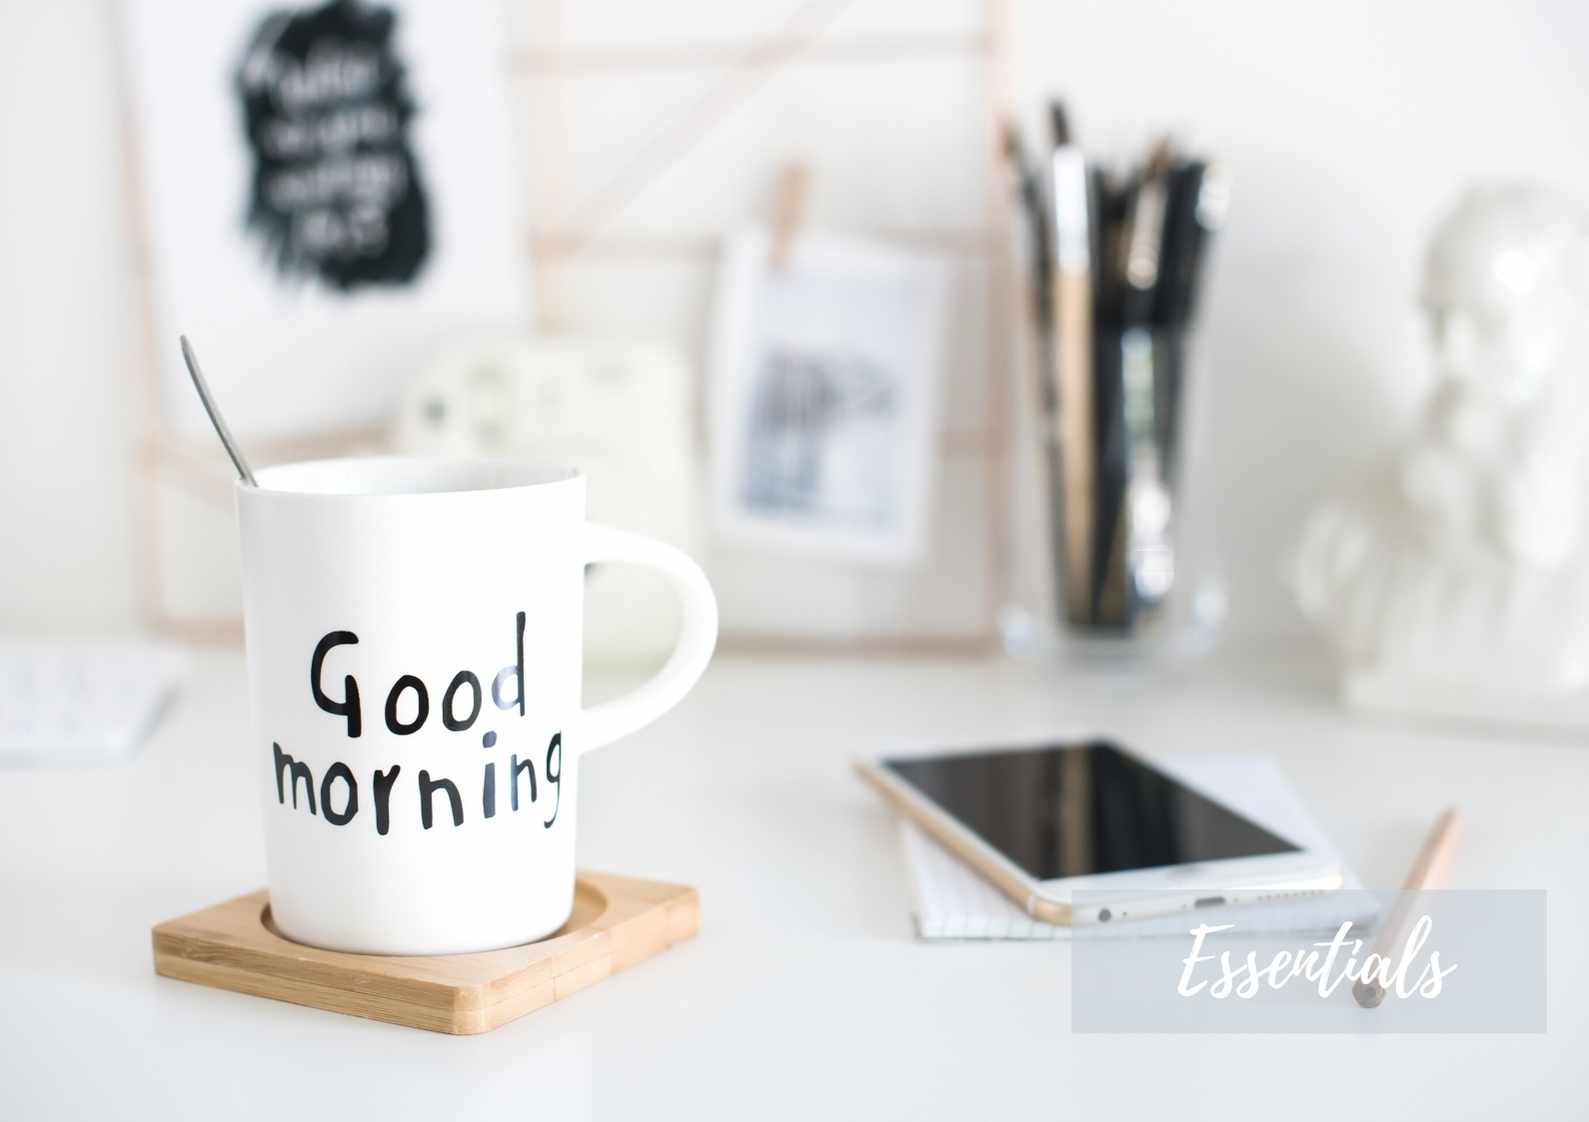 Tools for Home Office or Personal Use, good morning coffee mug, table with phone and mug